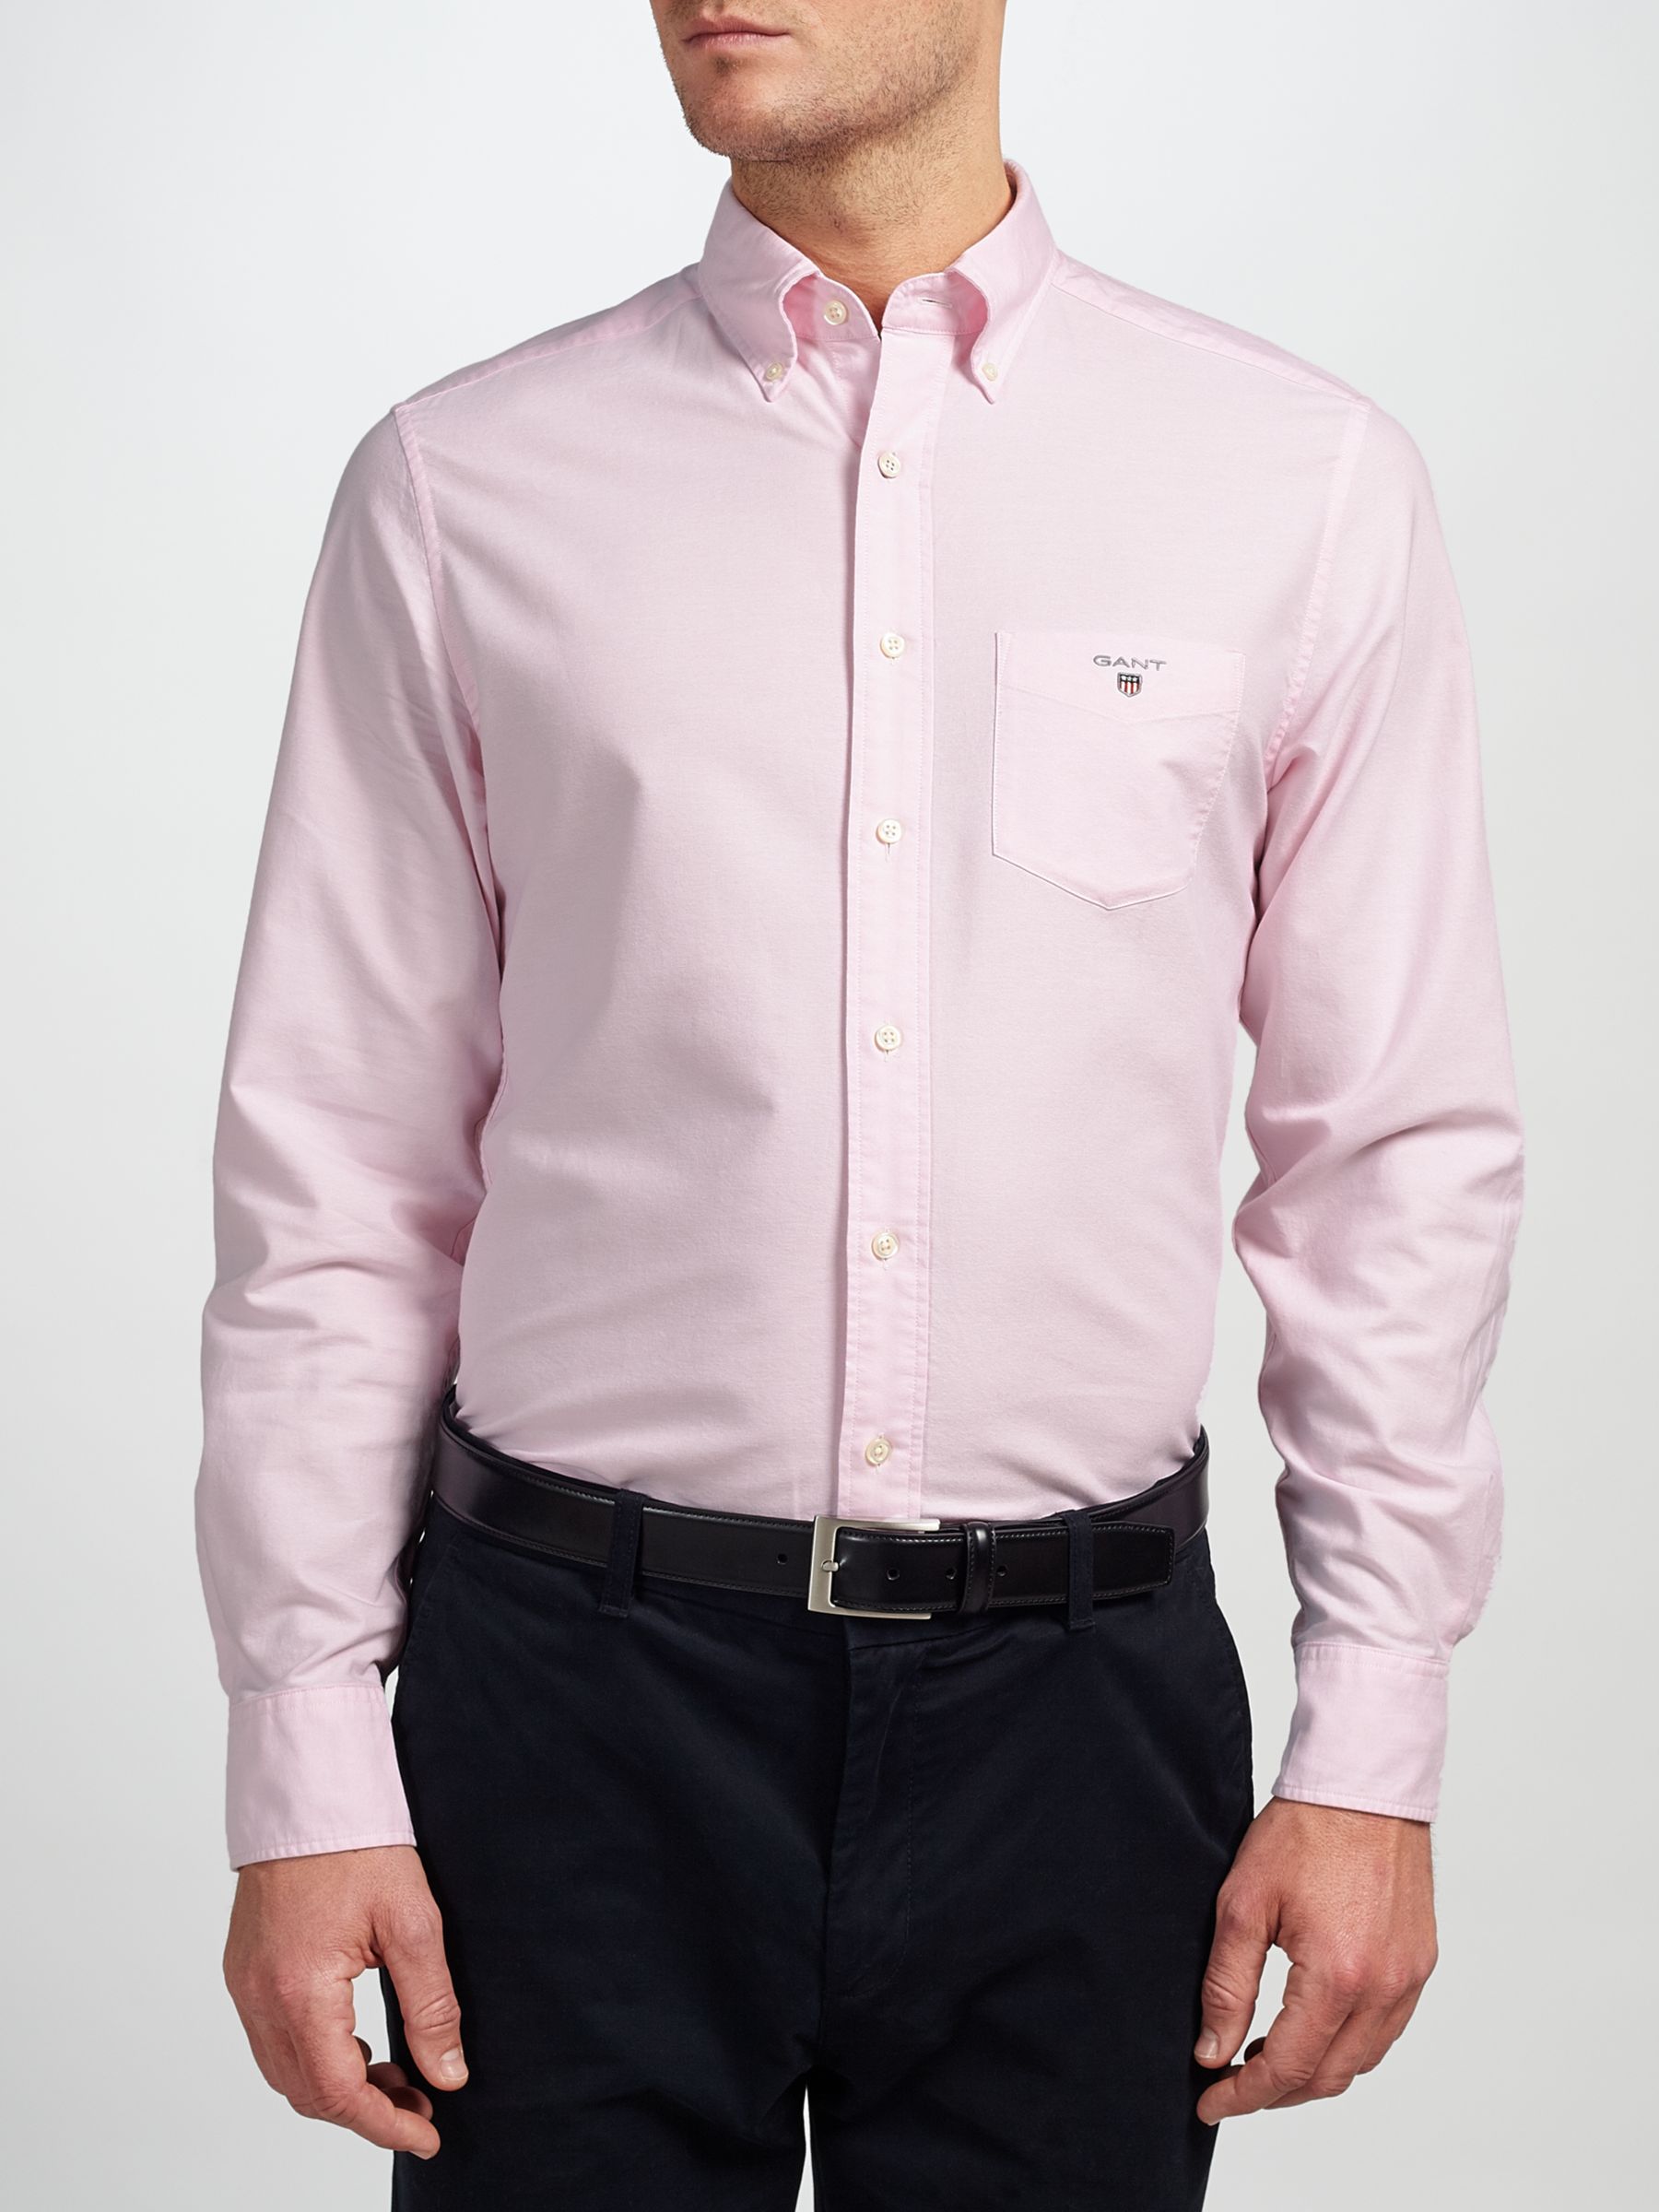 Gant Regular Fit Plain Oxford Shirt Pink At John Lewis And Partners